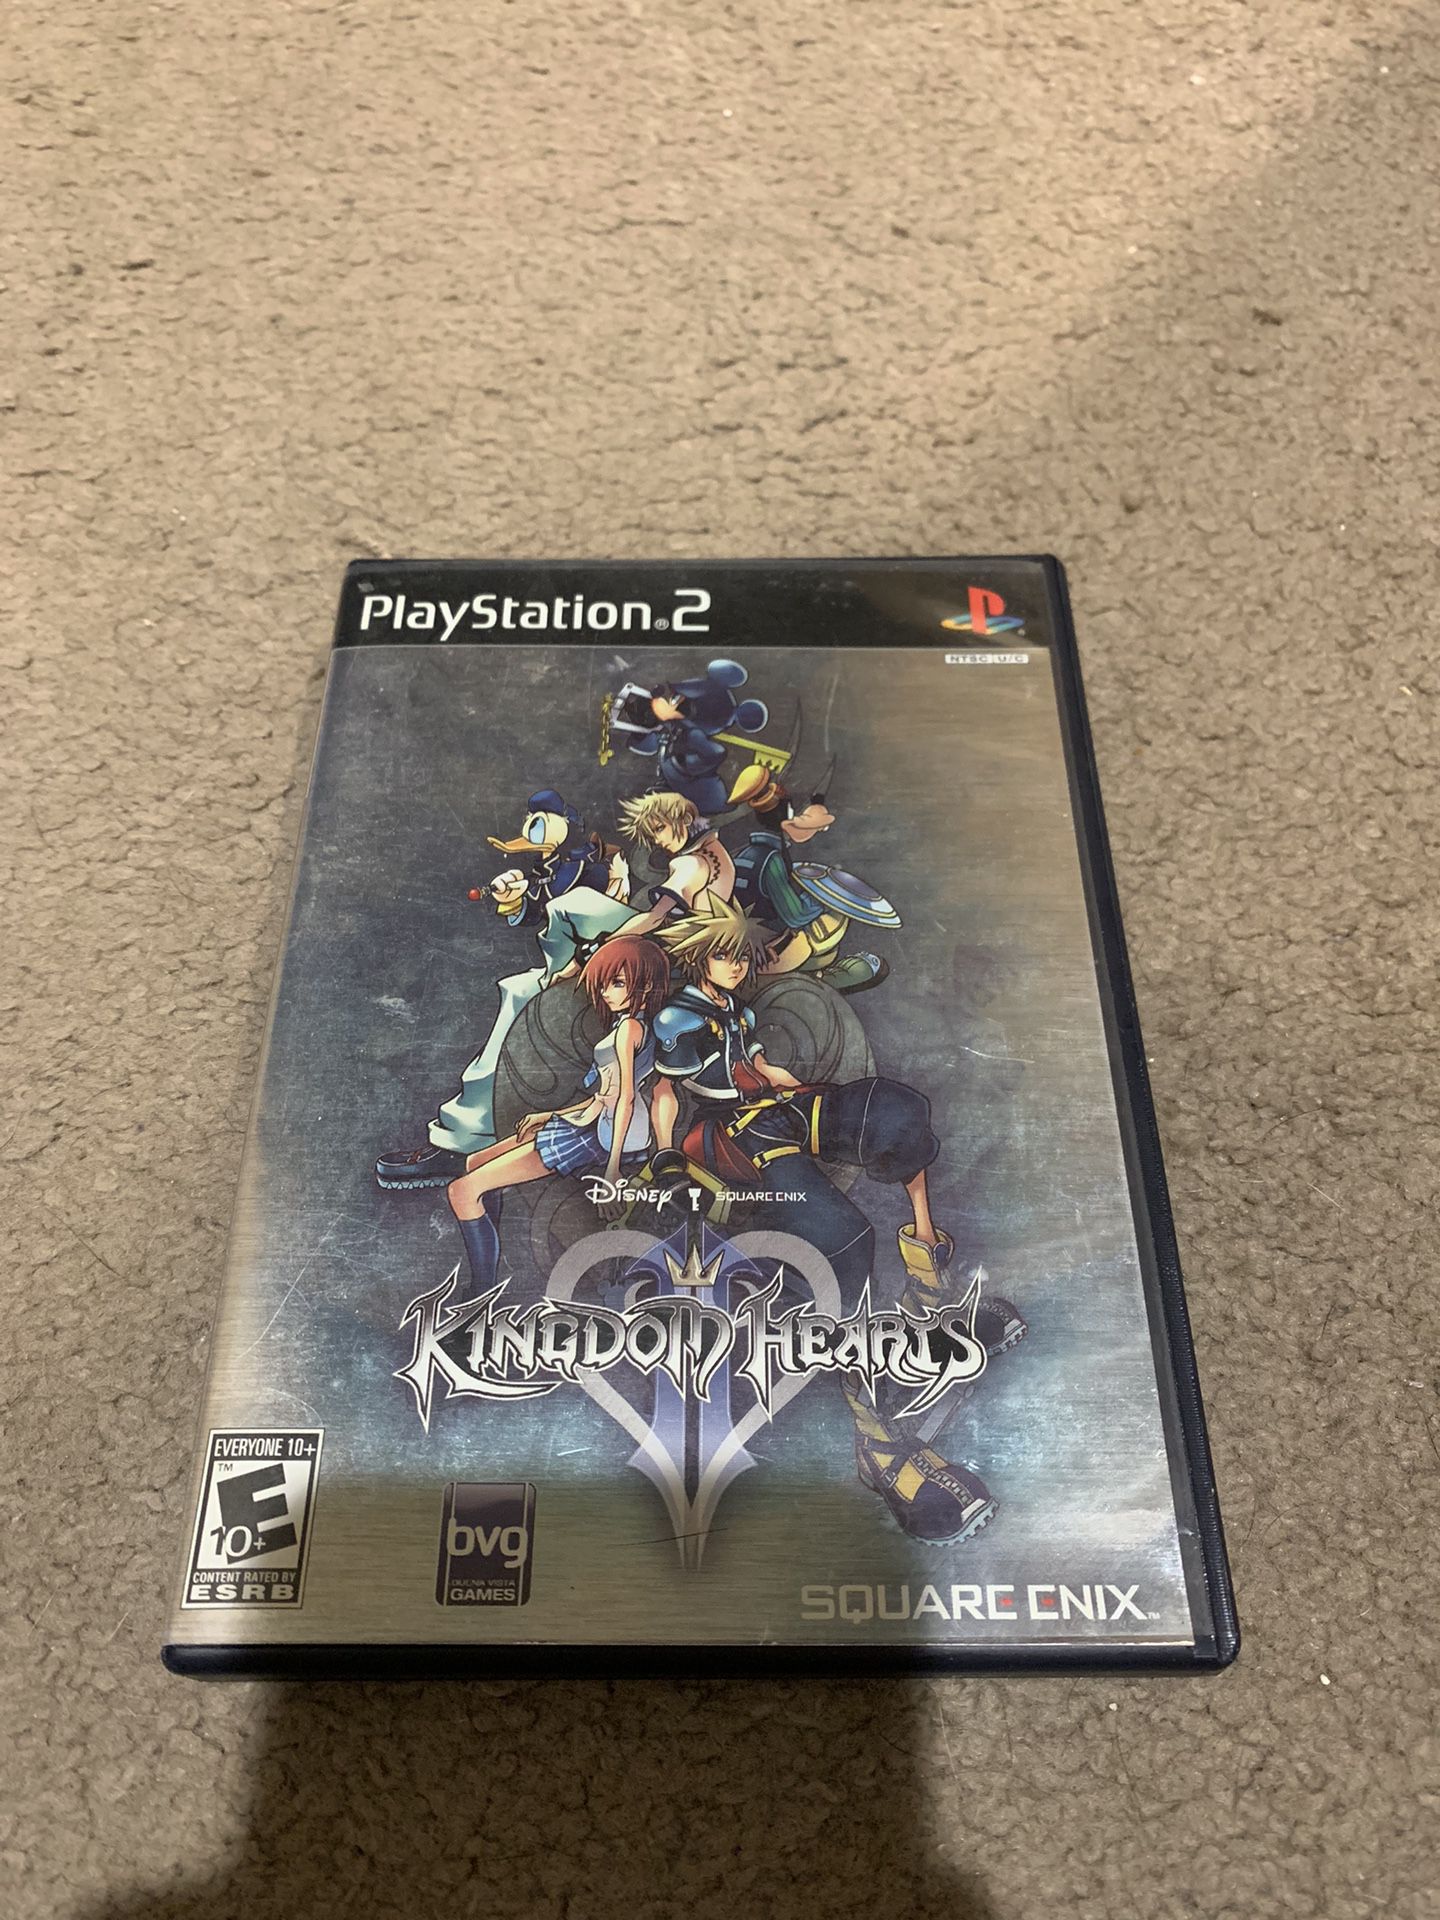 PS2 “Kingdom Hearts” Game